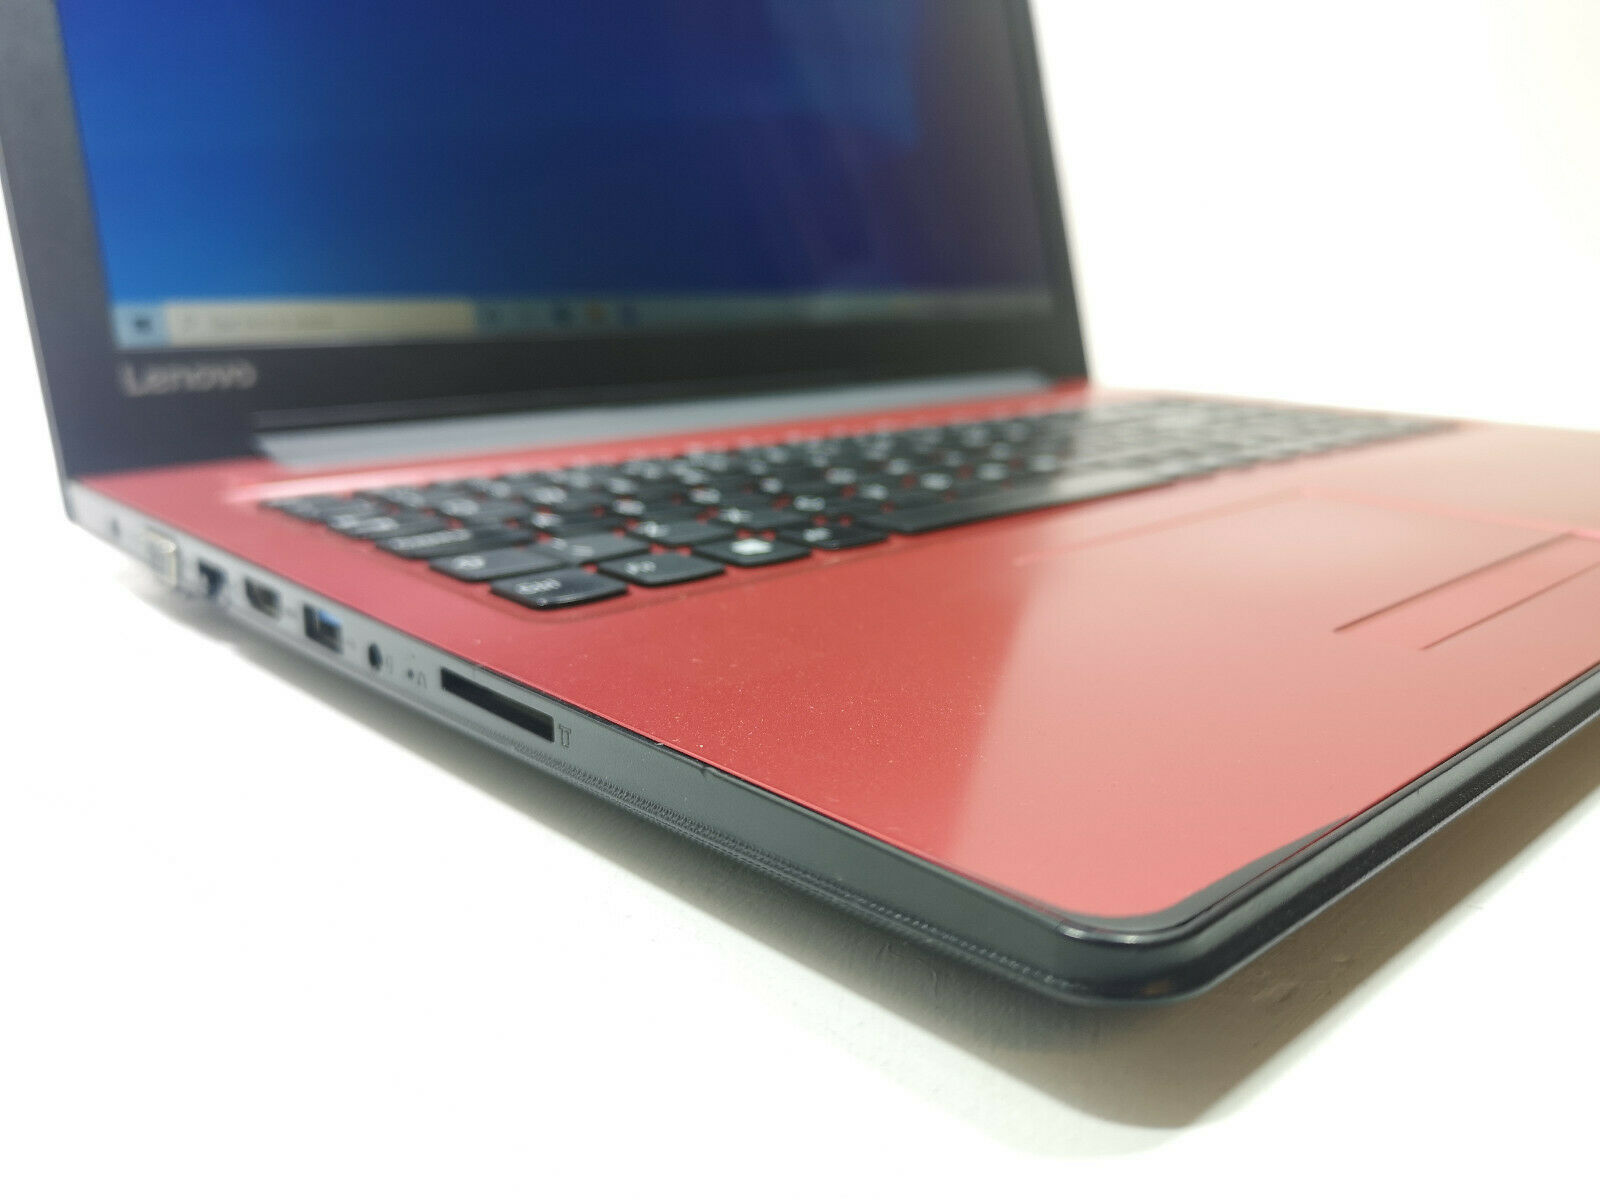 Refurbished Lenovo IdeaPad 310 Laptop PC